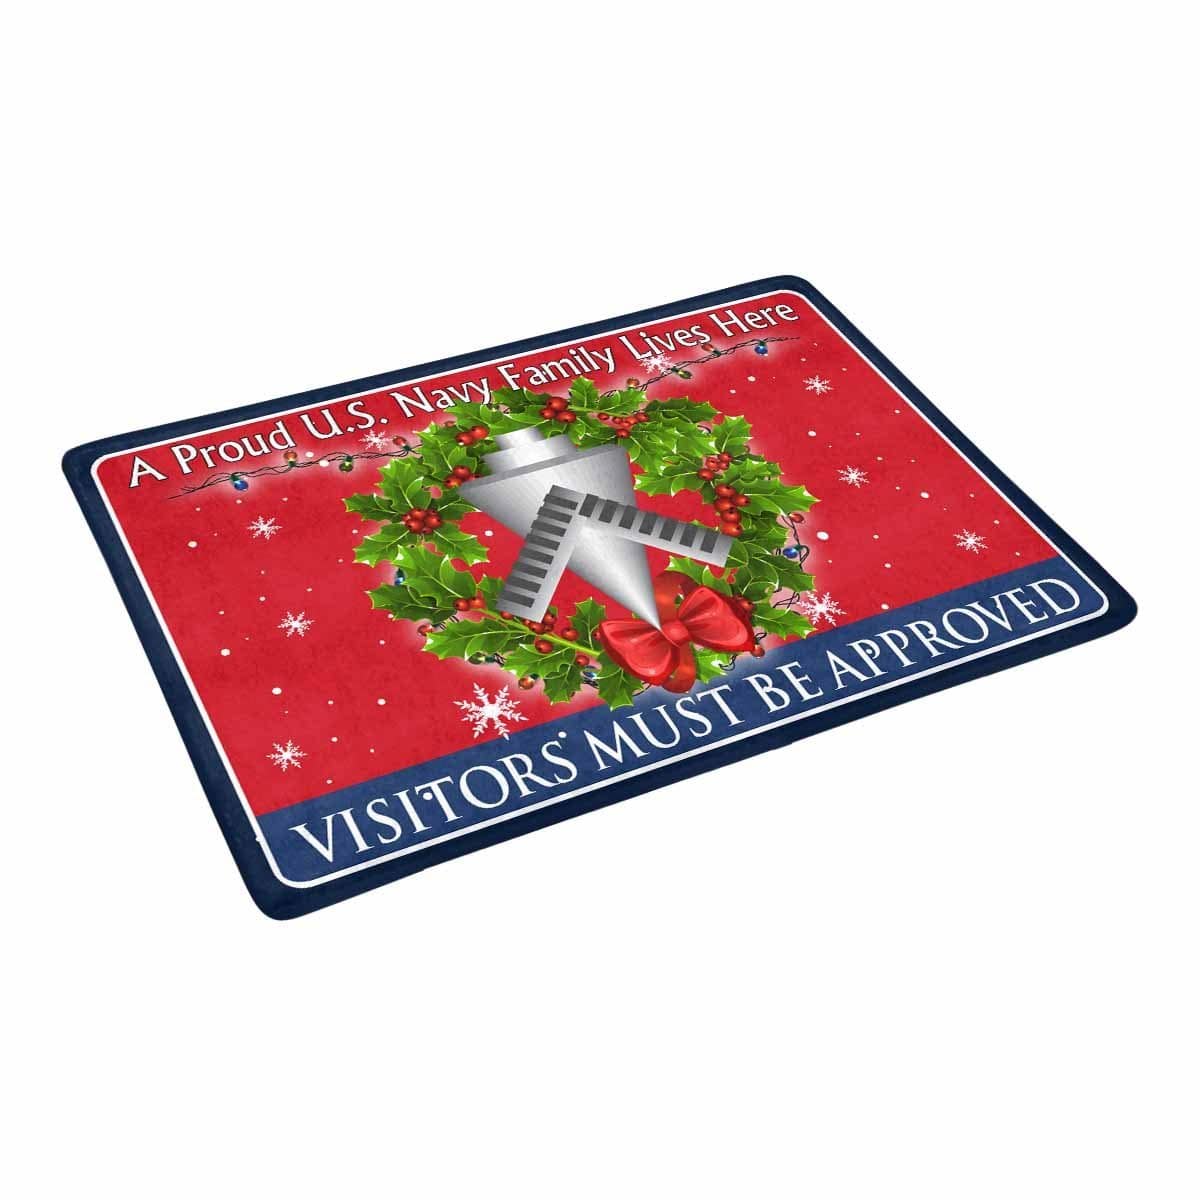 U.S Navy Builder Navy BU - Visitors must be approved - Christmas Doormat-Doormat-Navy-Rate-Veterans Nation